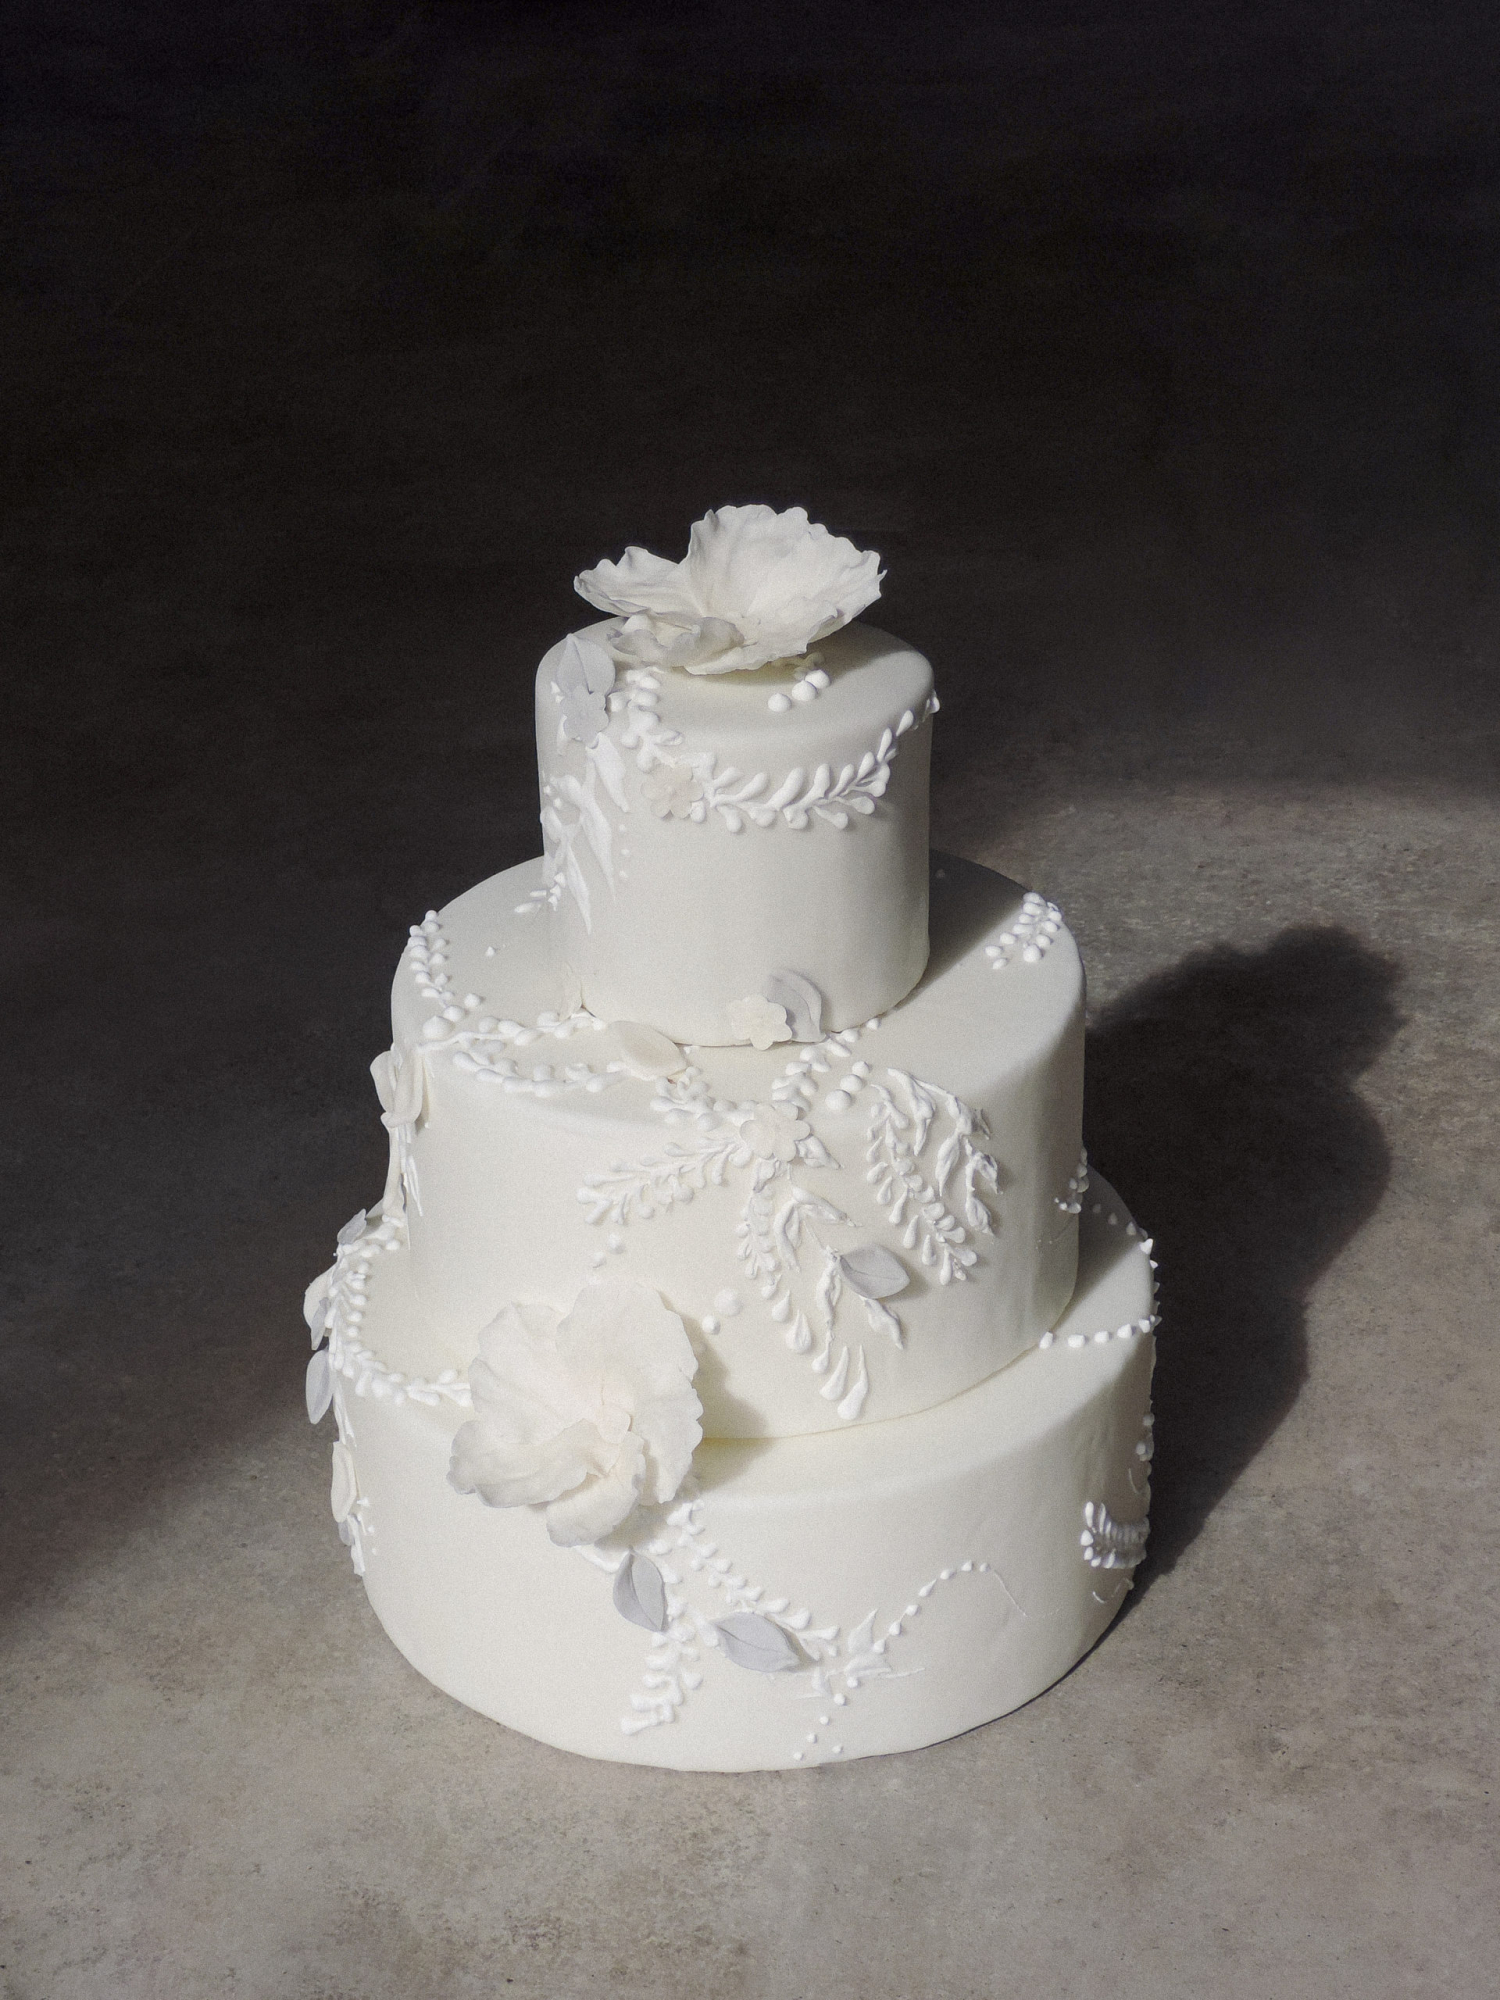 creations wedding cake dessert mariage patisseries maine et loire gateaux